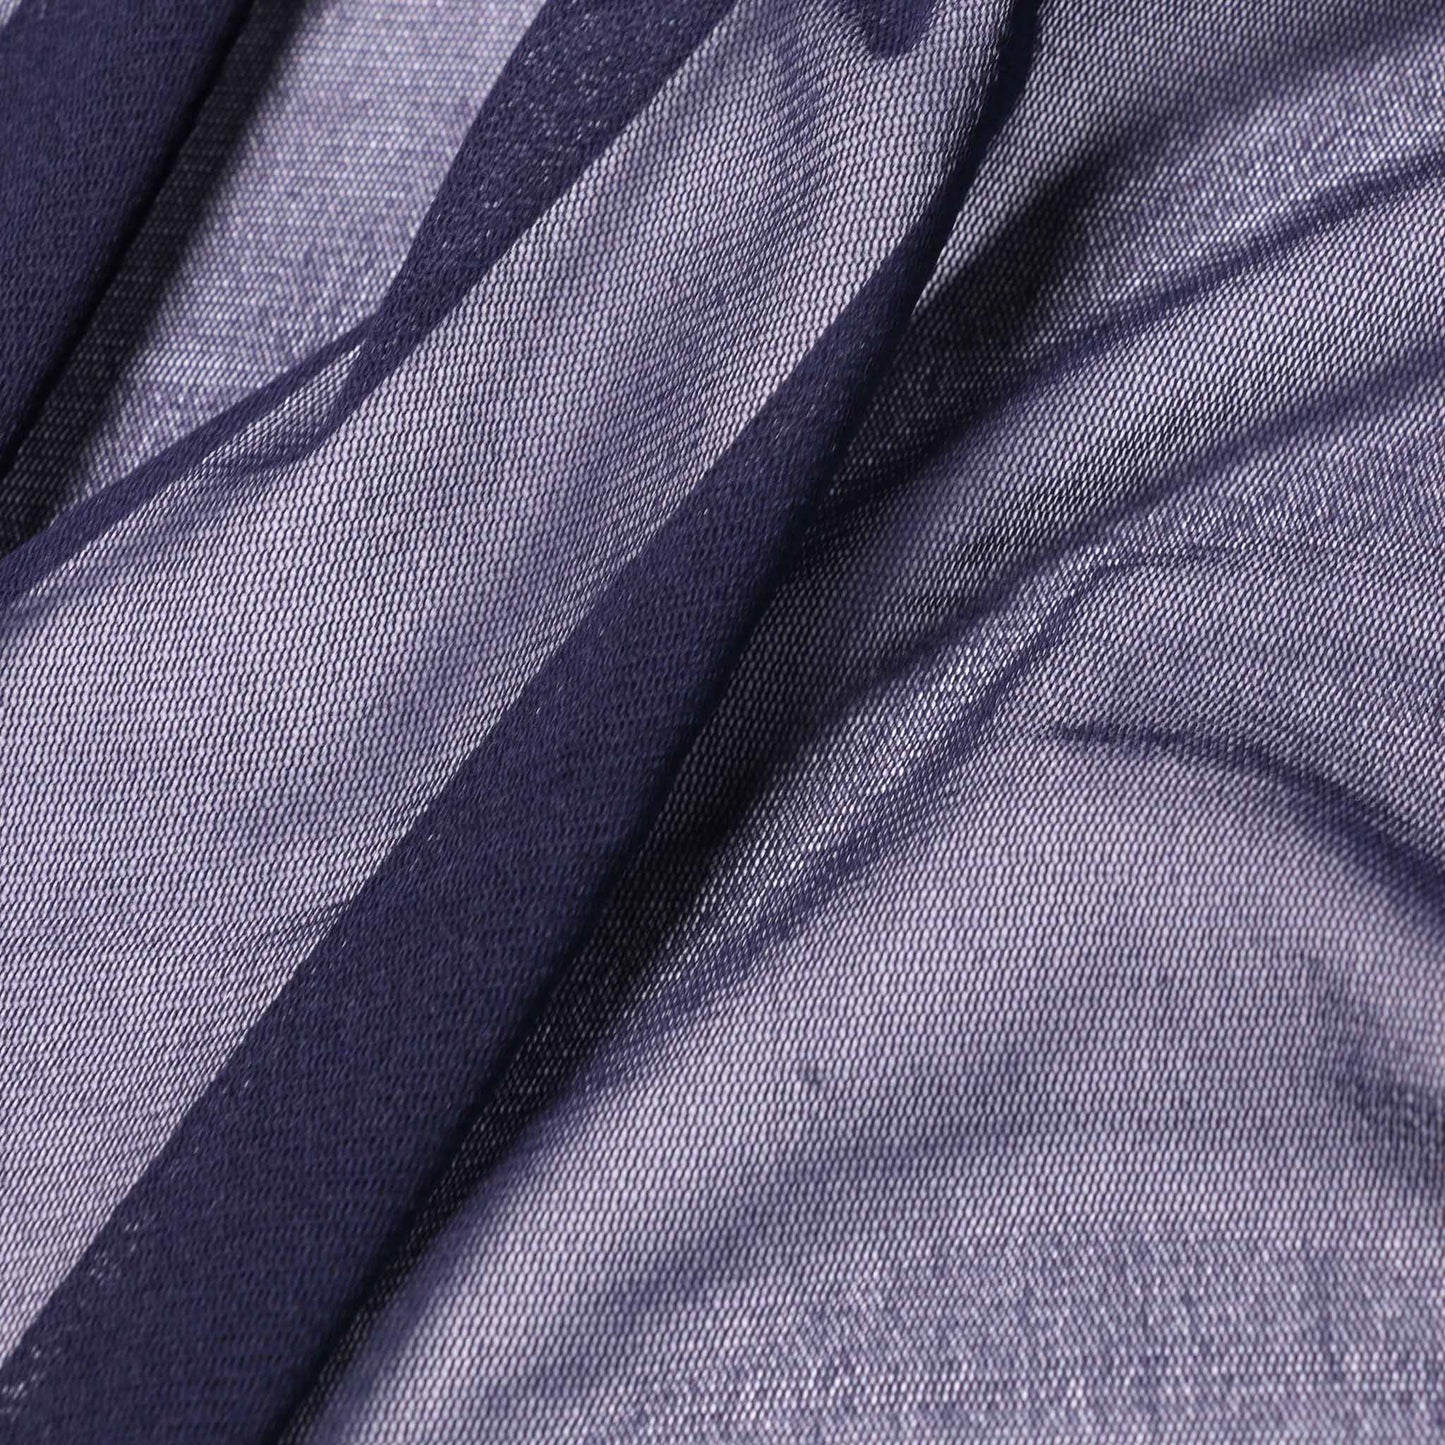 plain navy coloured stretchy dressmaking netting fabric